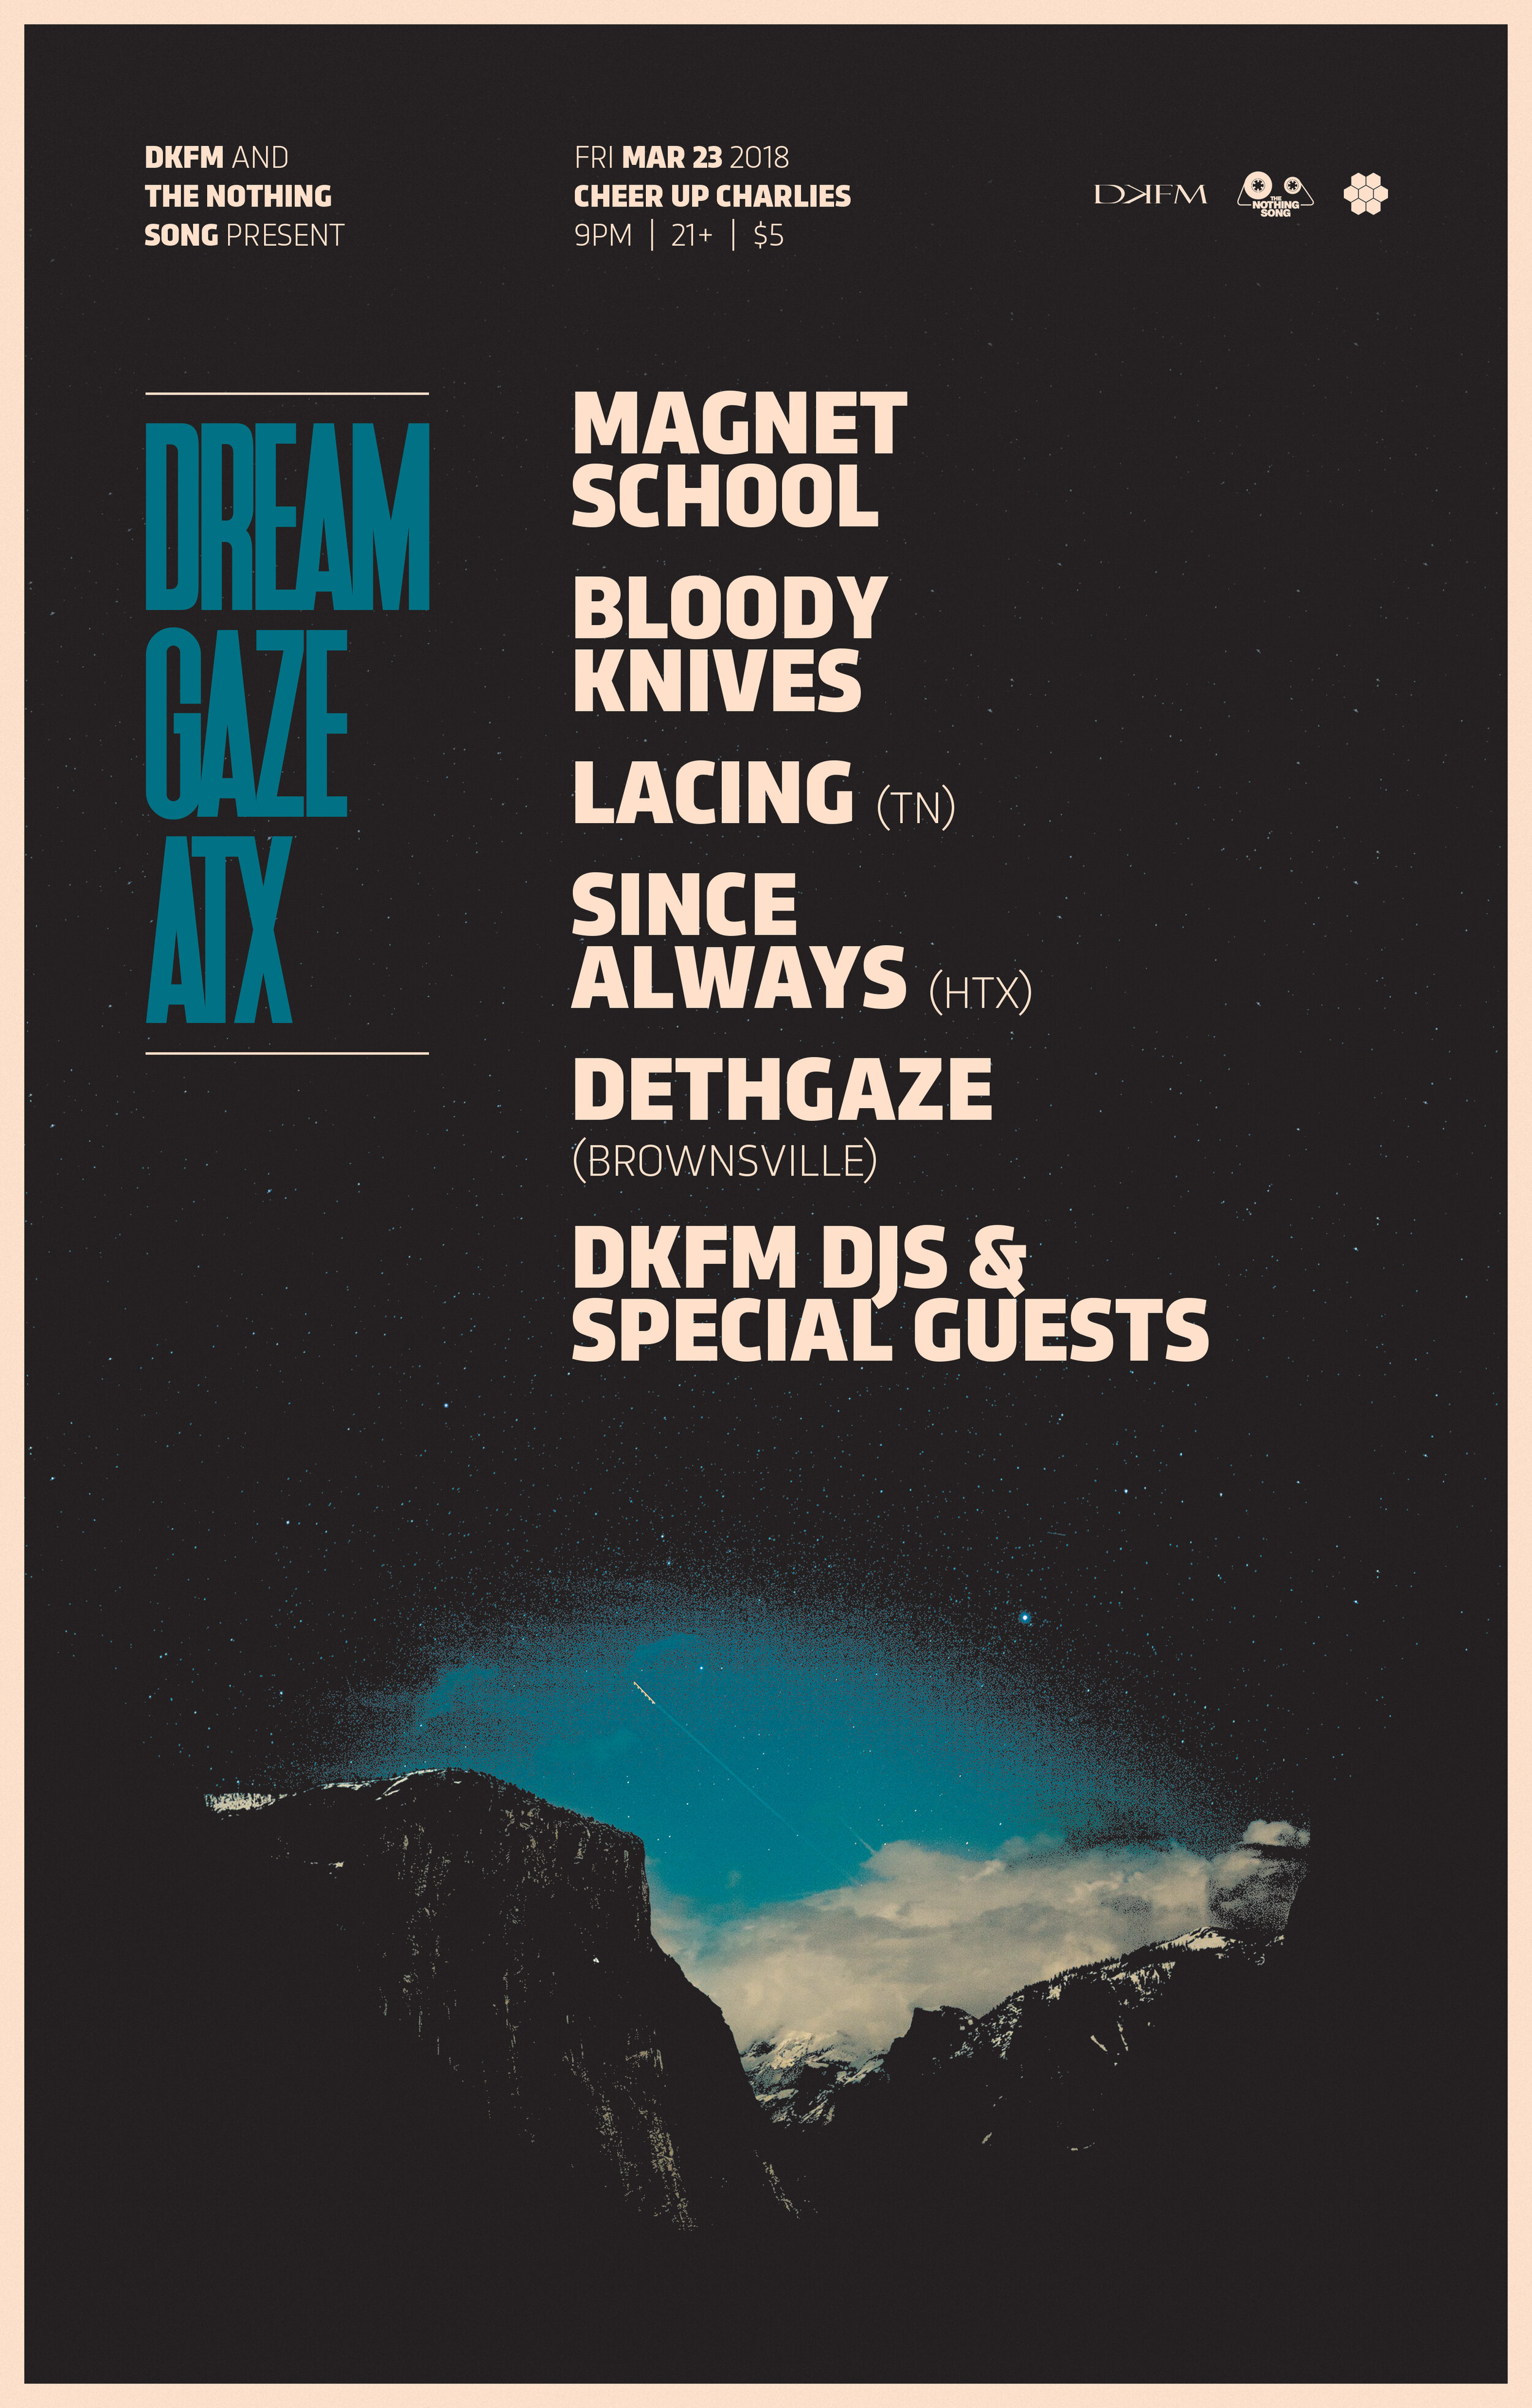 Dreamgaze ATX - 2018